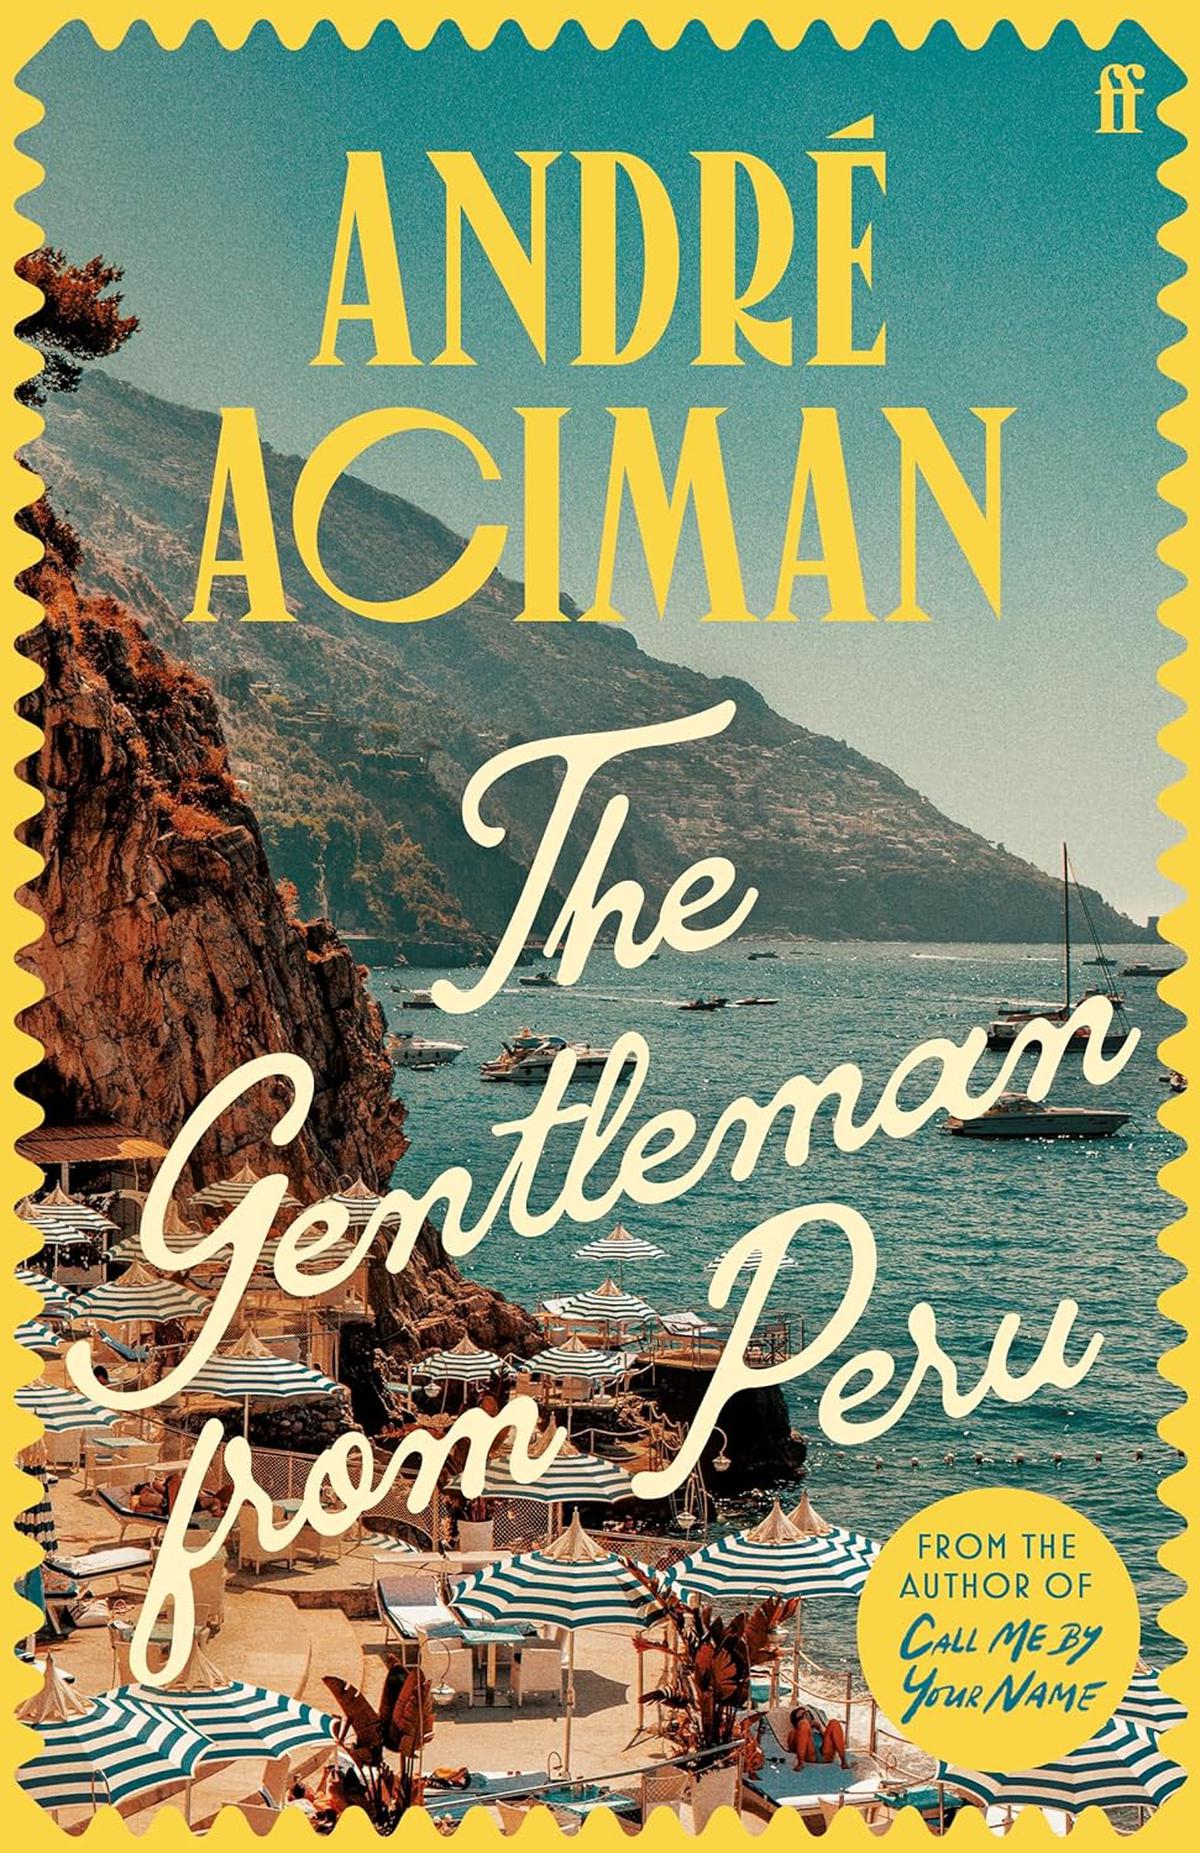 André Aciman’s latest novella ‘The Gentleman from Peru’